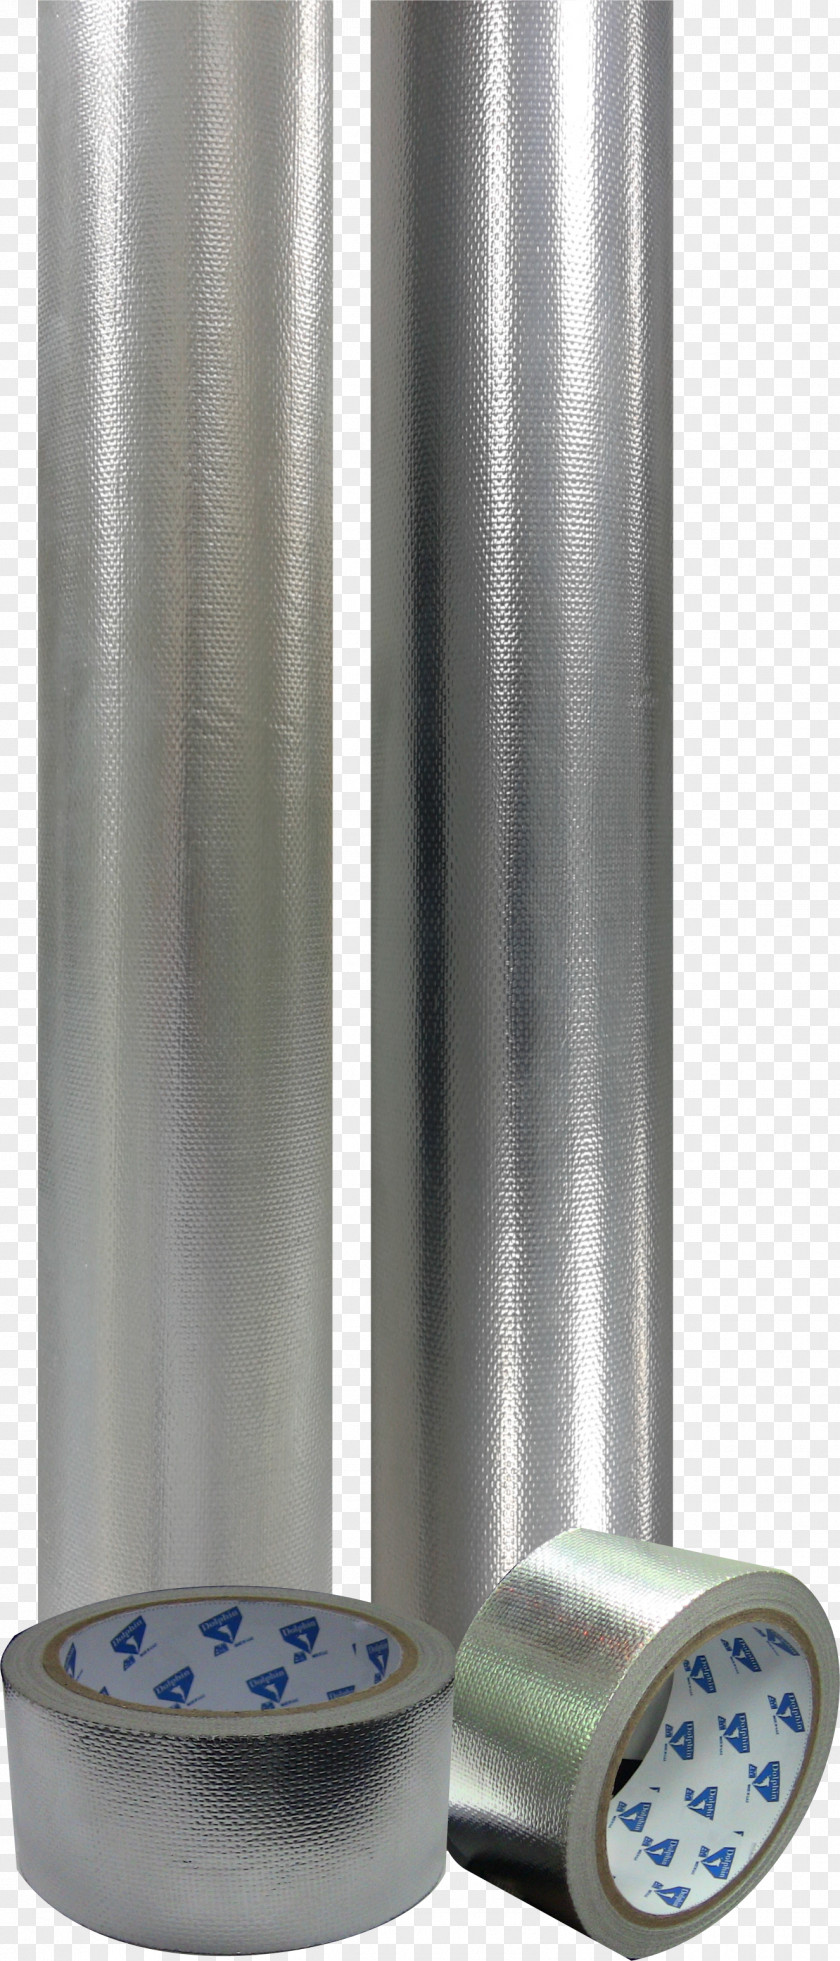 Black Adhesive Tape Aluminium Foil Glass Fiber Industry PNG